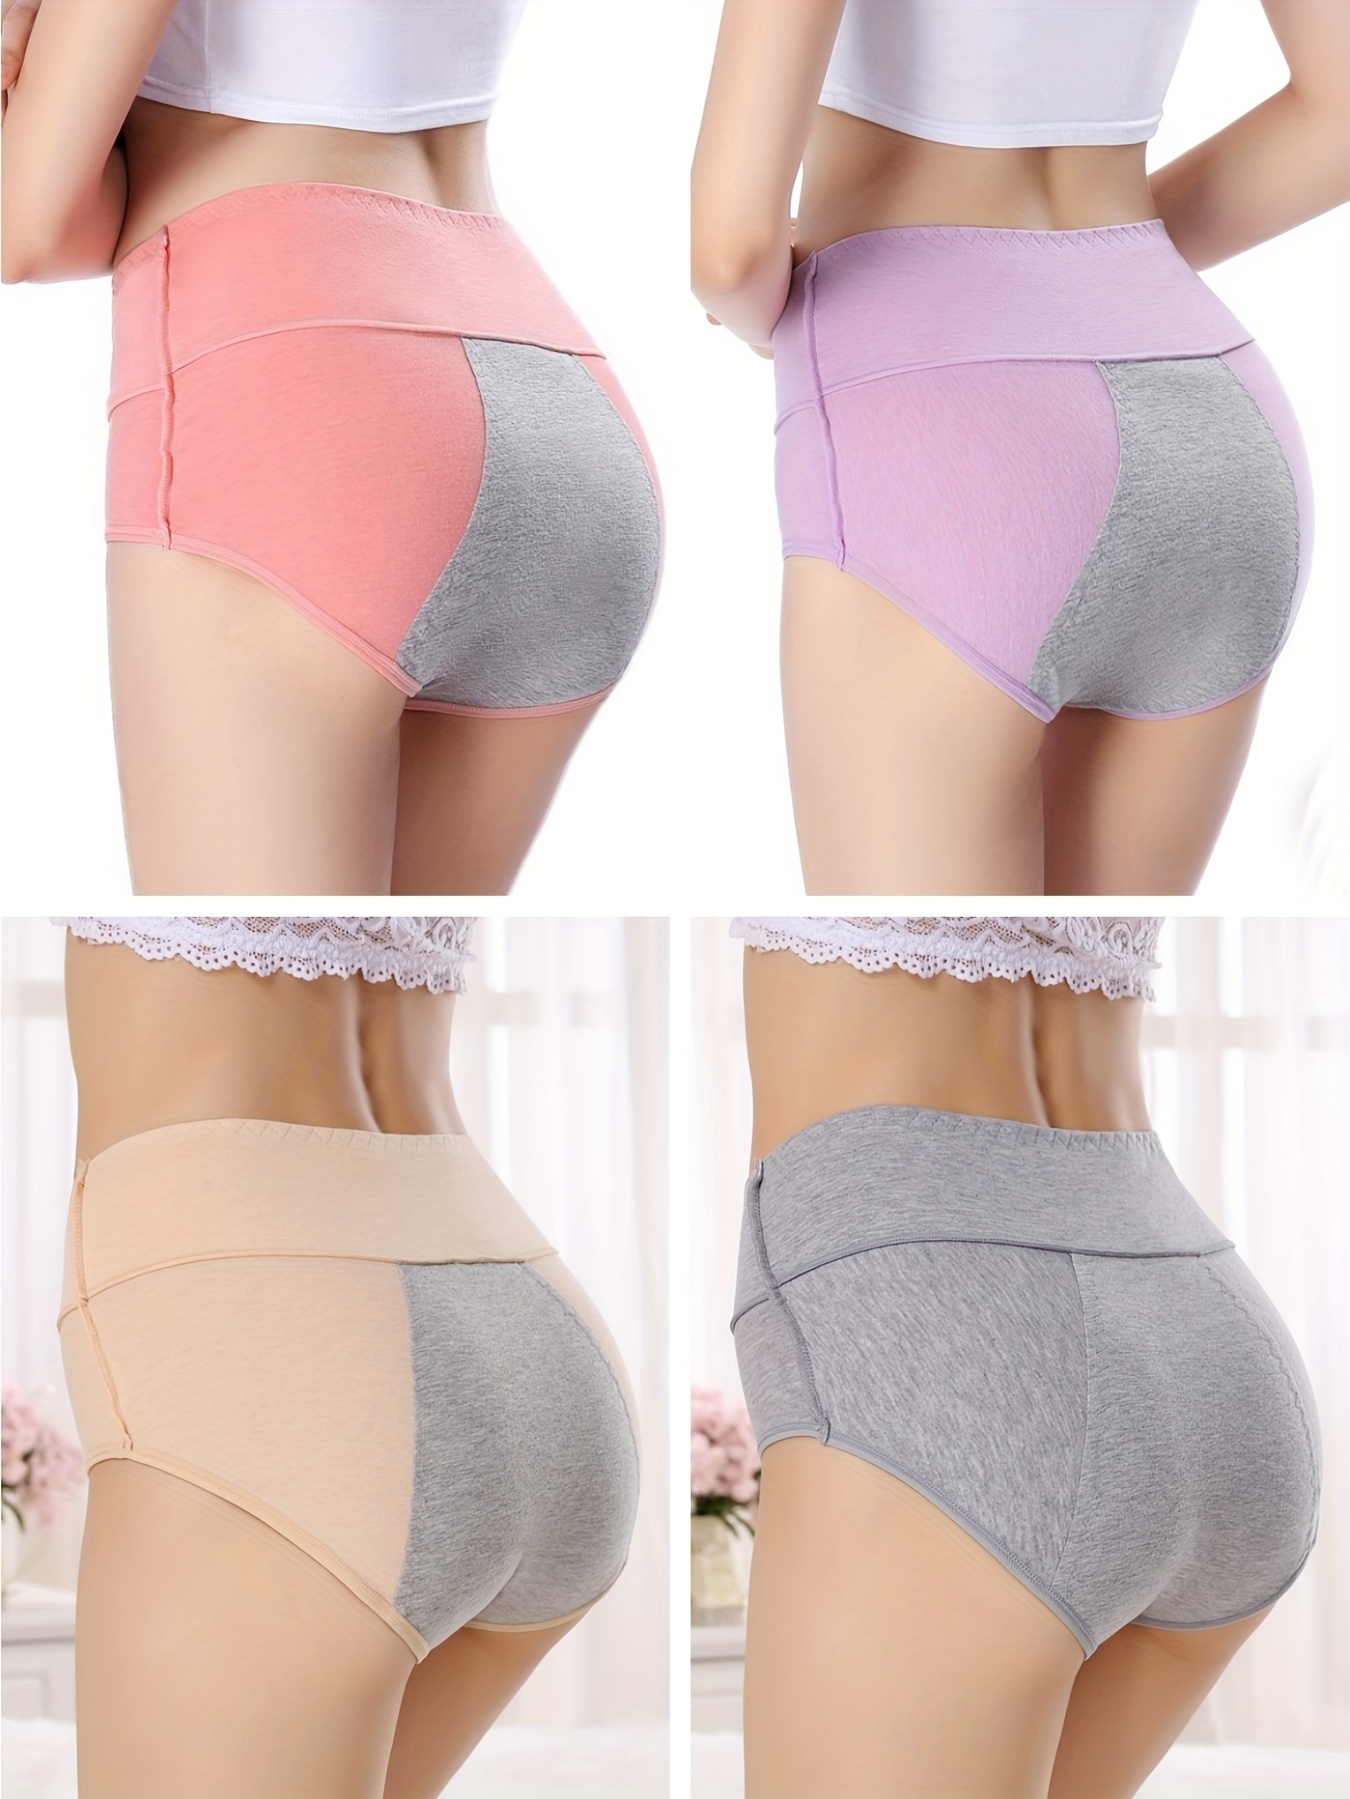 Miiow 4pcs Quick Dry Women's Sexy Panties Lingerie Lace Shorts